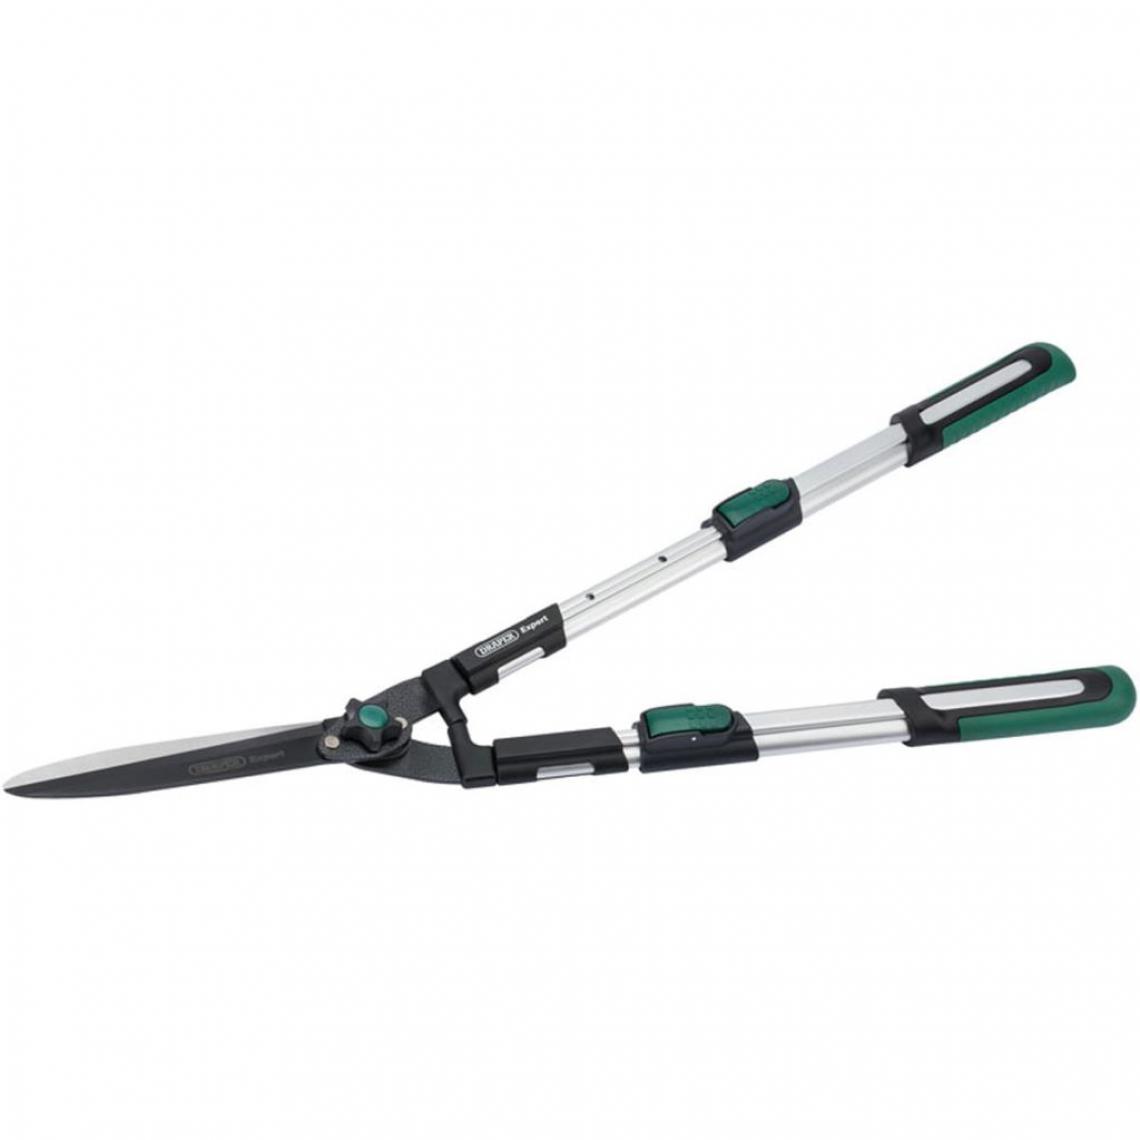 Draper Tools - Draper Tools Cisailles télescopiques de jardin 85 cm 36780 - Cisailles, sécateurs, ébrancheurs, échenilloirs